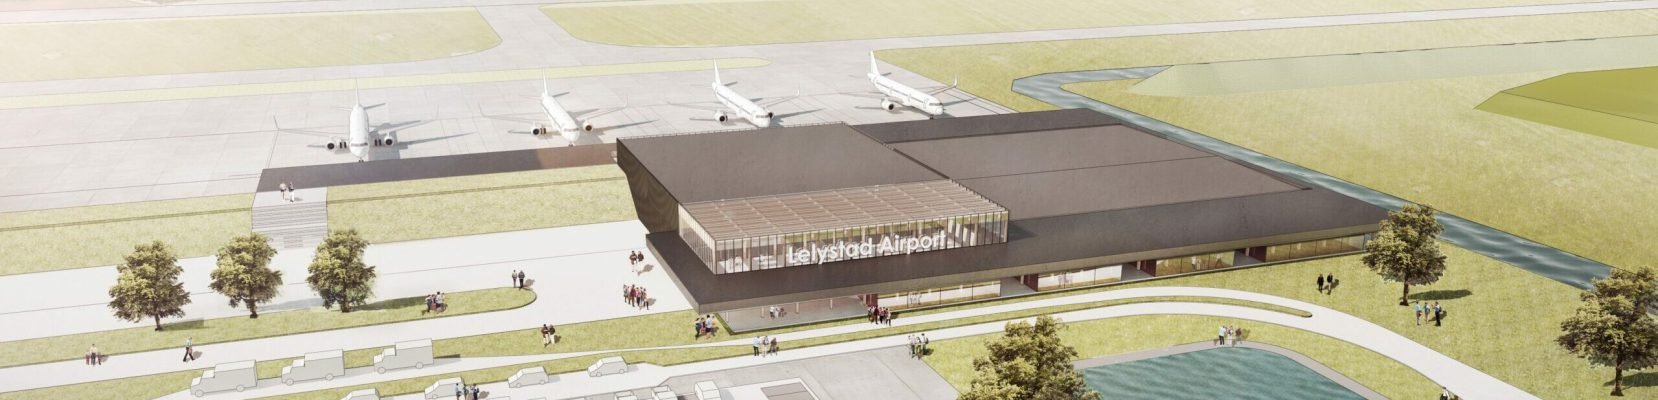 Project Lelystad Airport MPenB